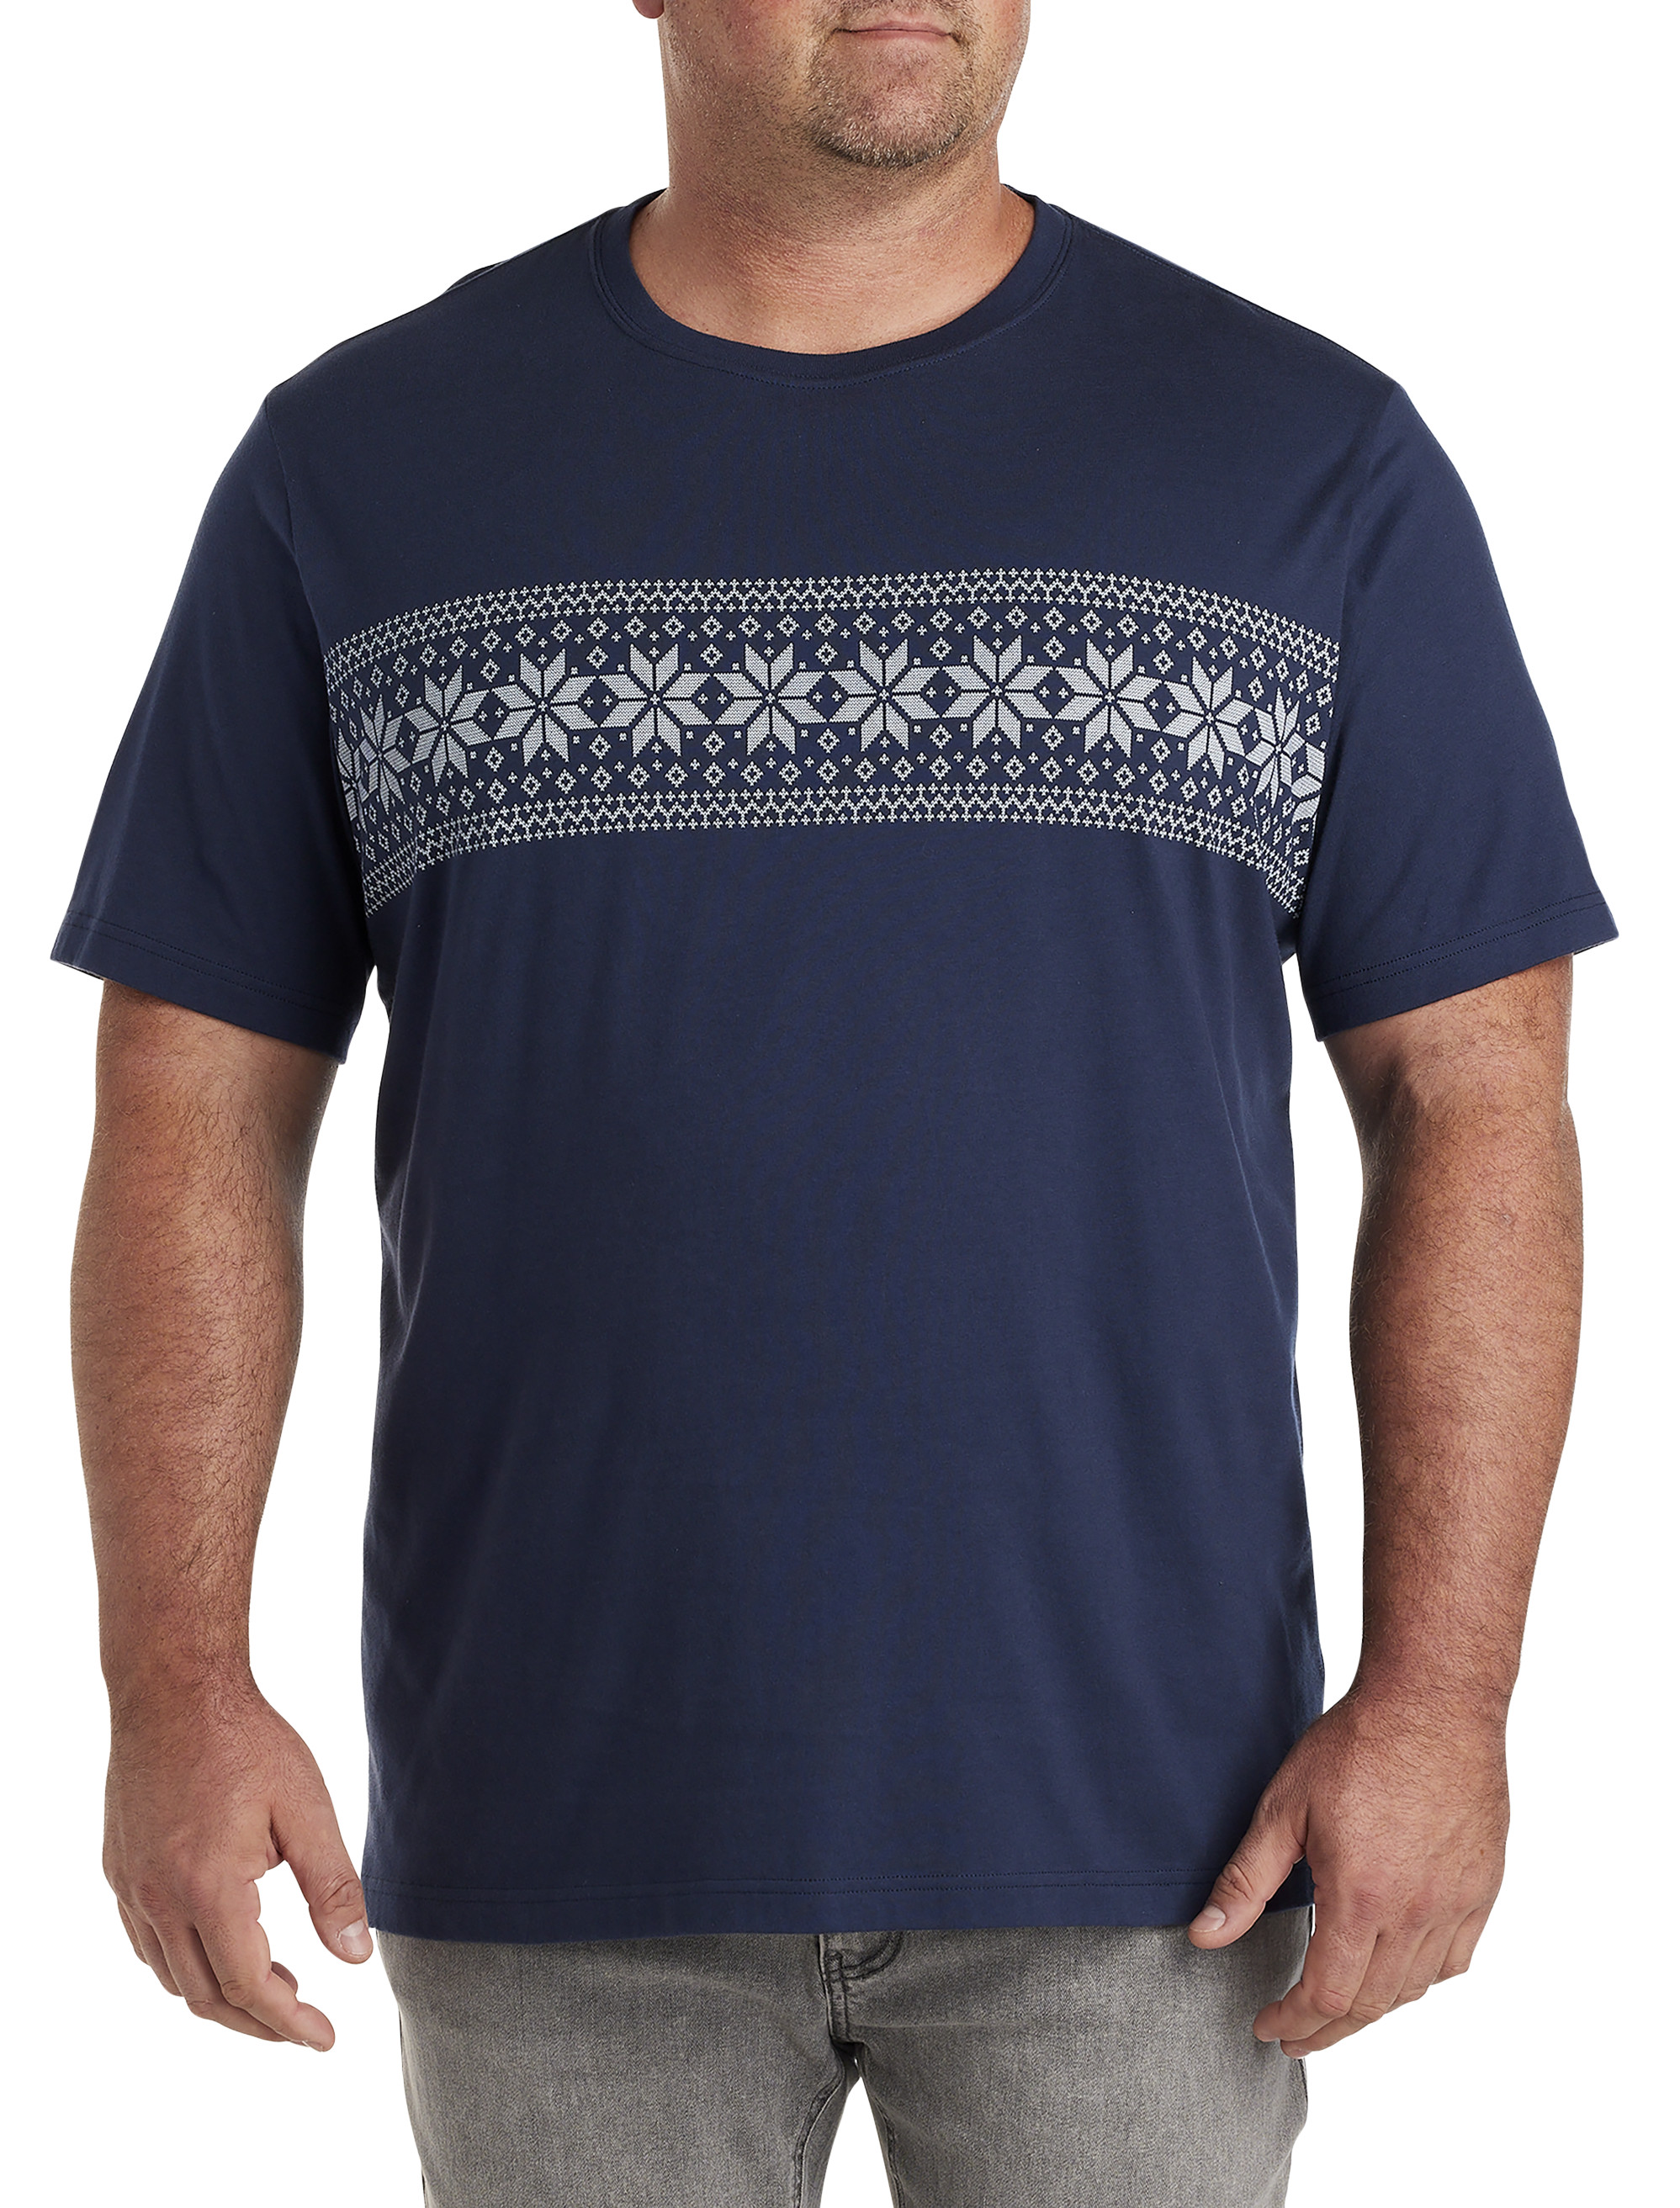 Men's Casual Big V Graphic Print T-shirt, Trendy Round Neck Tee